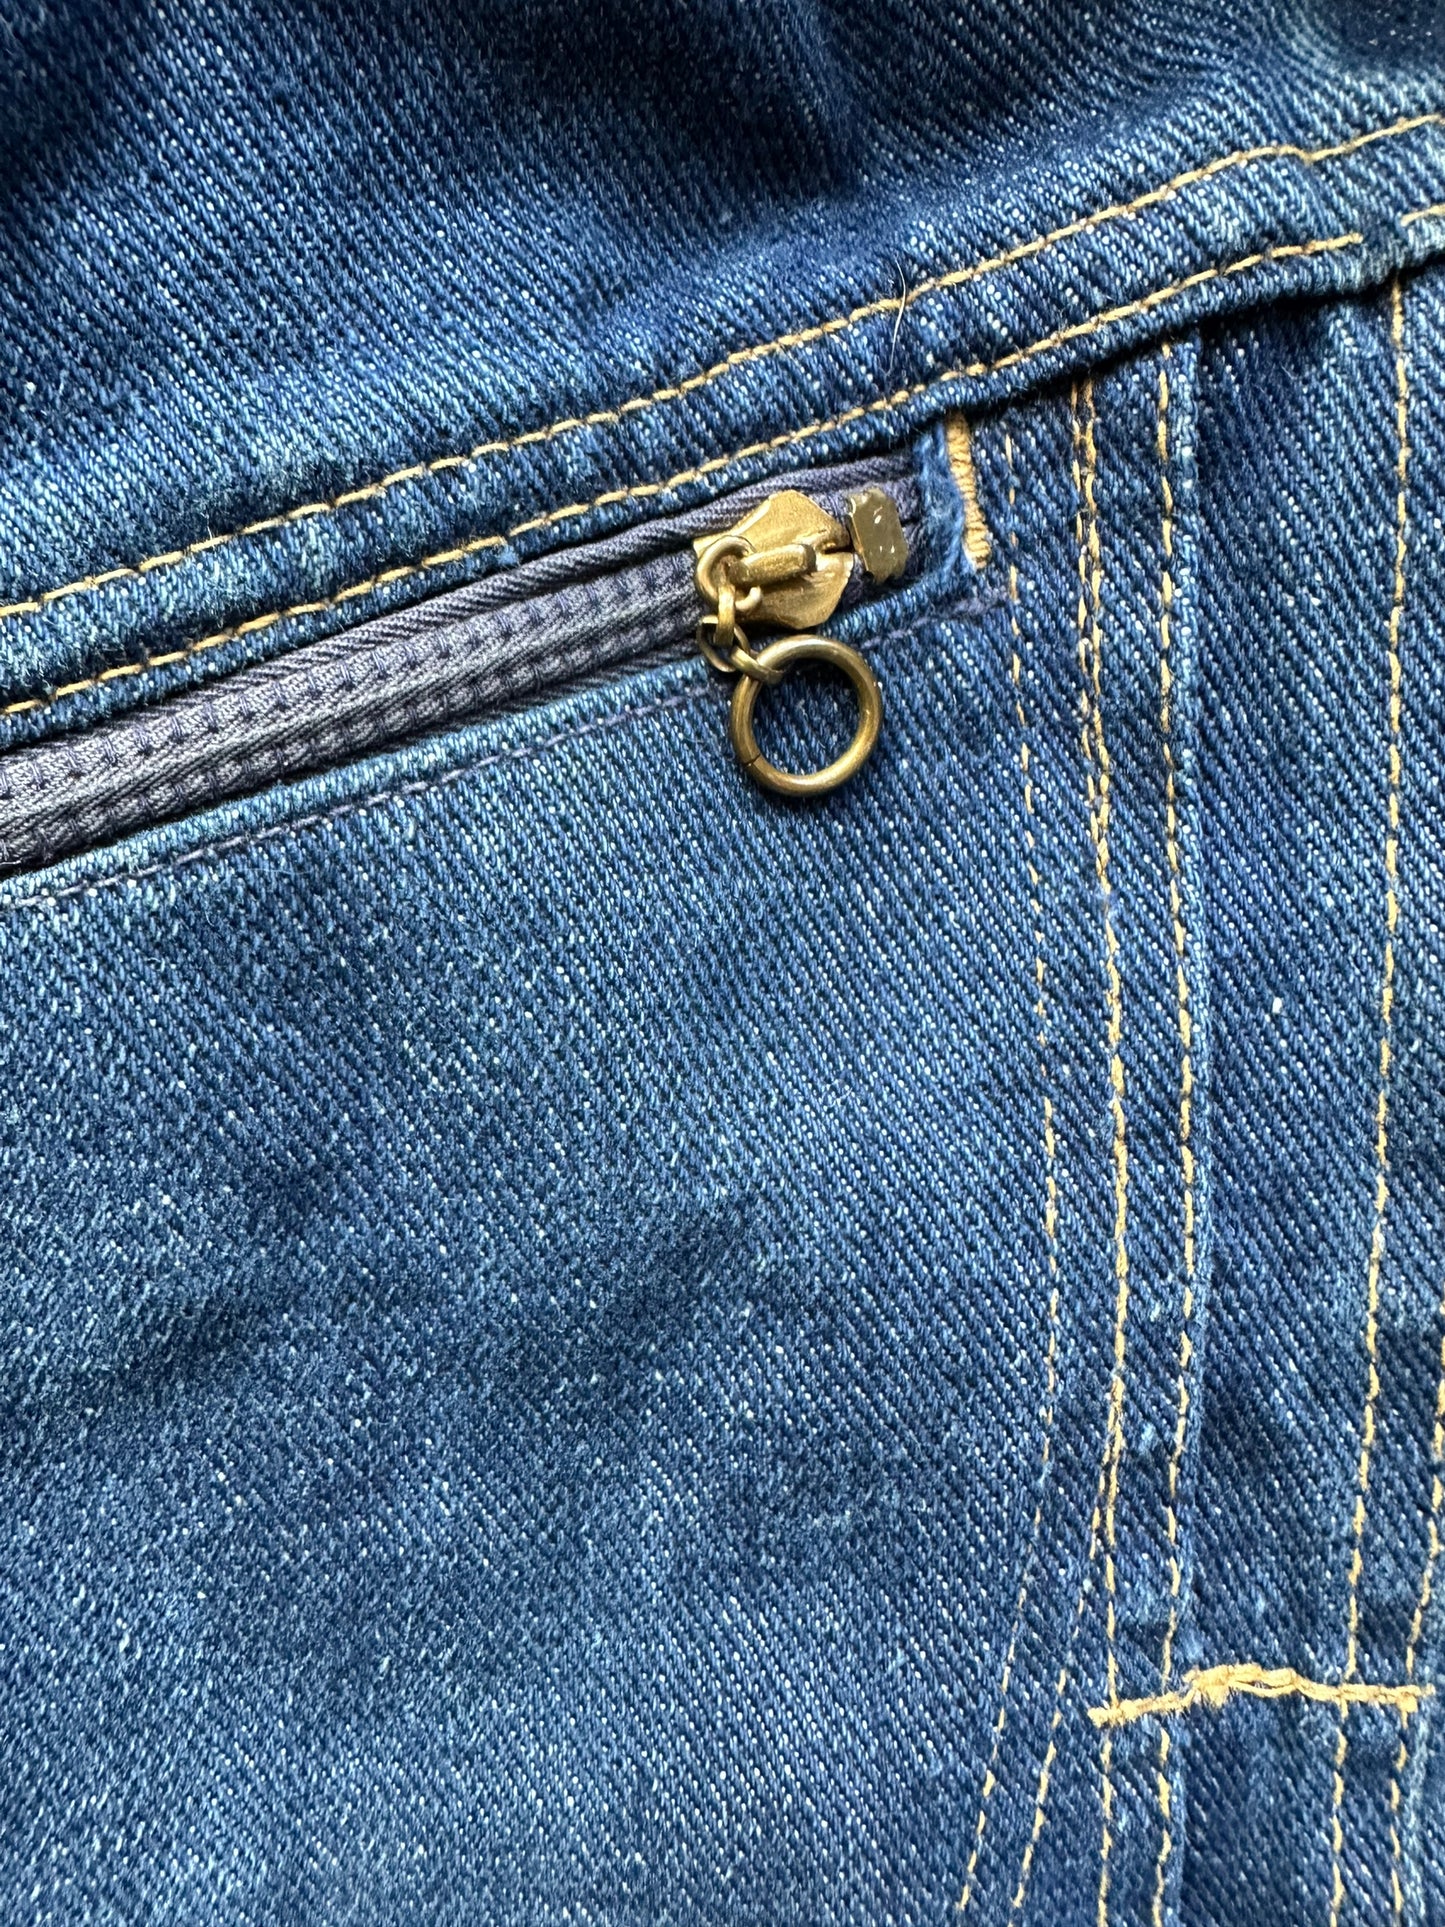 Zipper Pull Detail on Vintage Roebucks Selvedge Denim Jacket SZ S | Vintage Jean Jacket Seattle | Seattle Vintage Denim